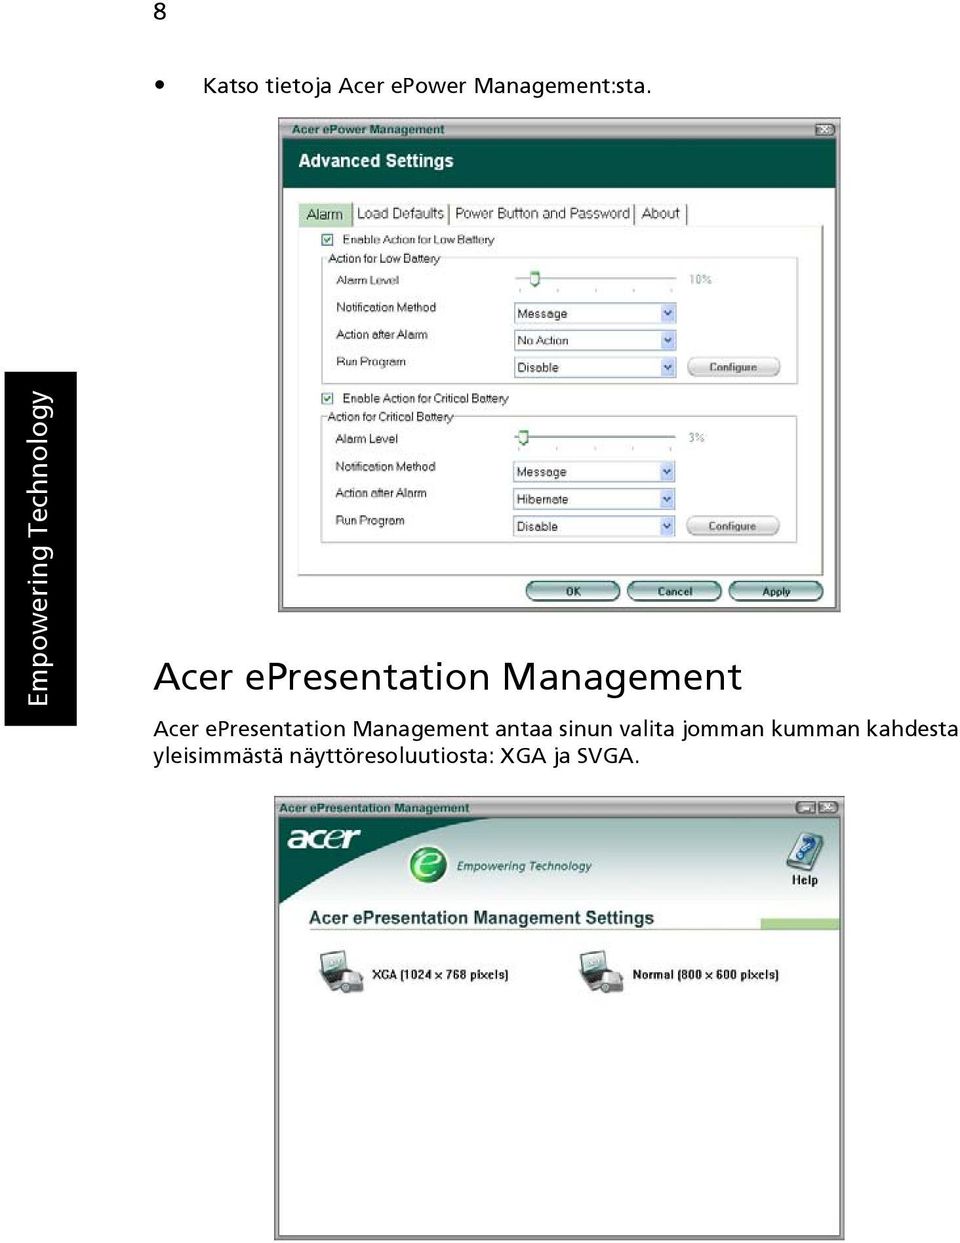 Acer epresentation Management antaa sinun valita